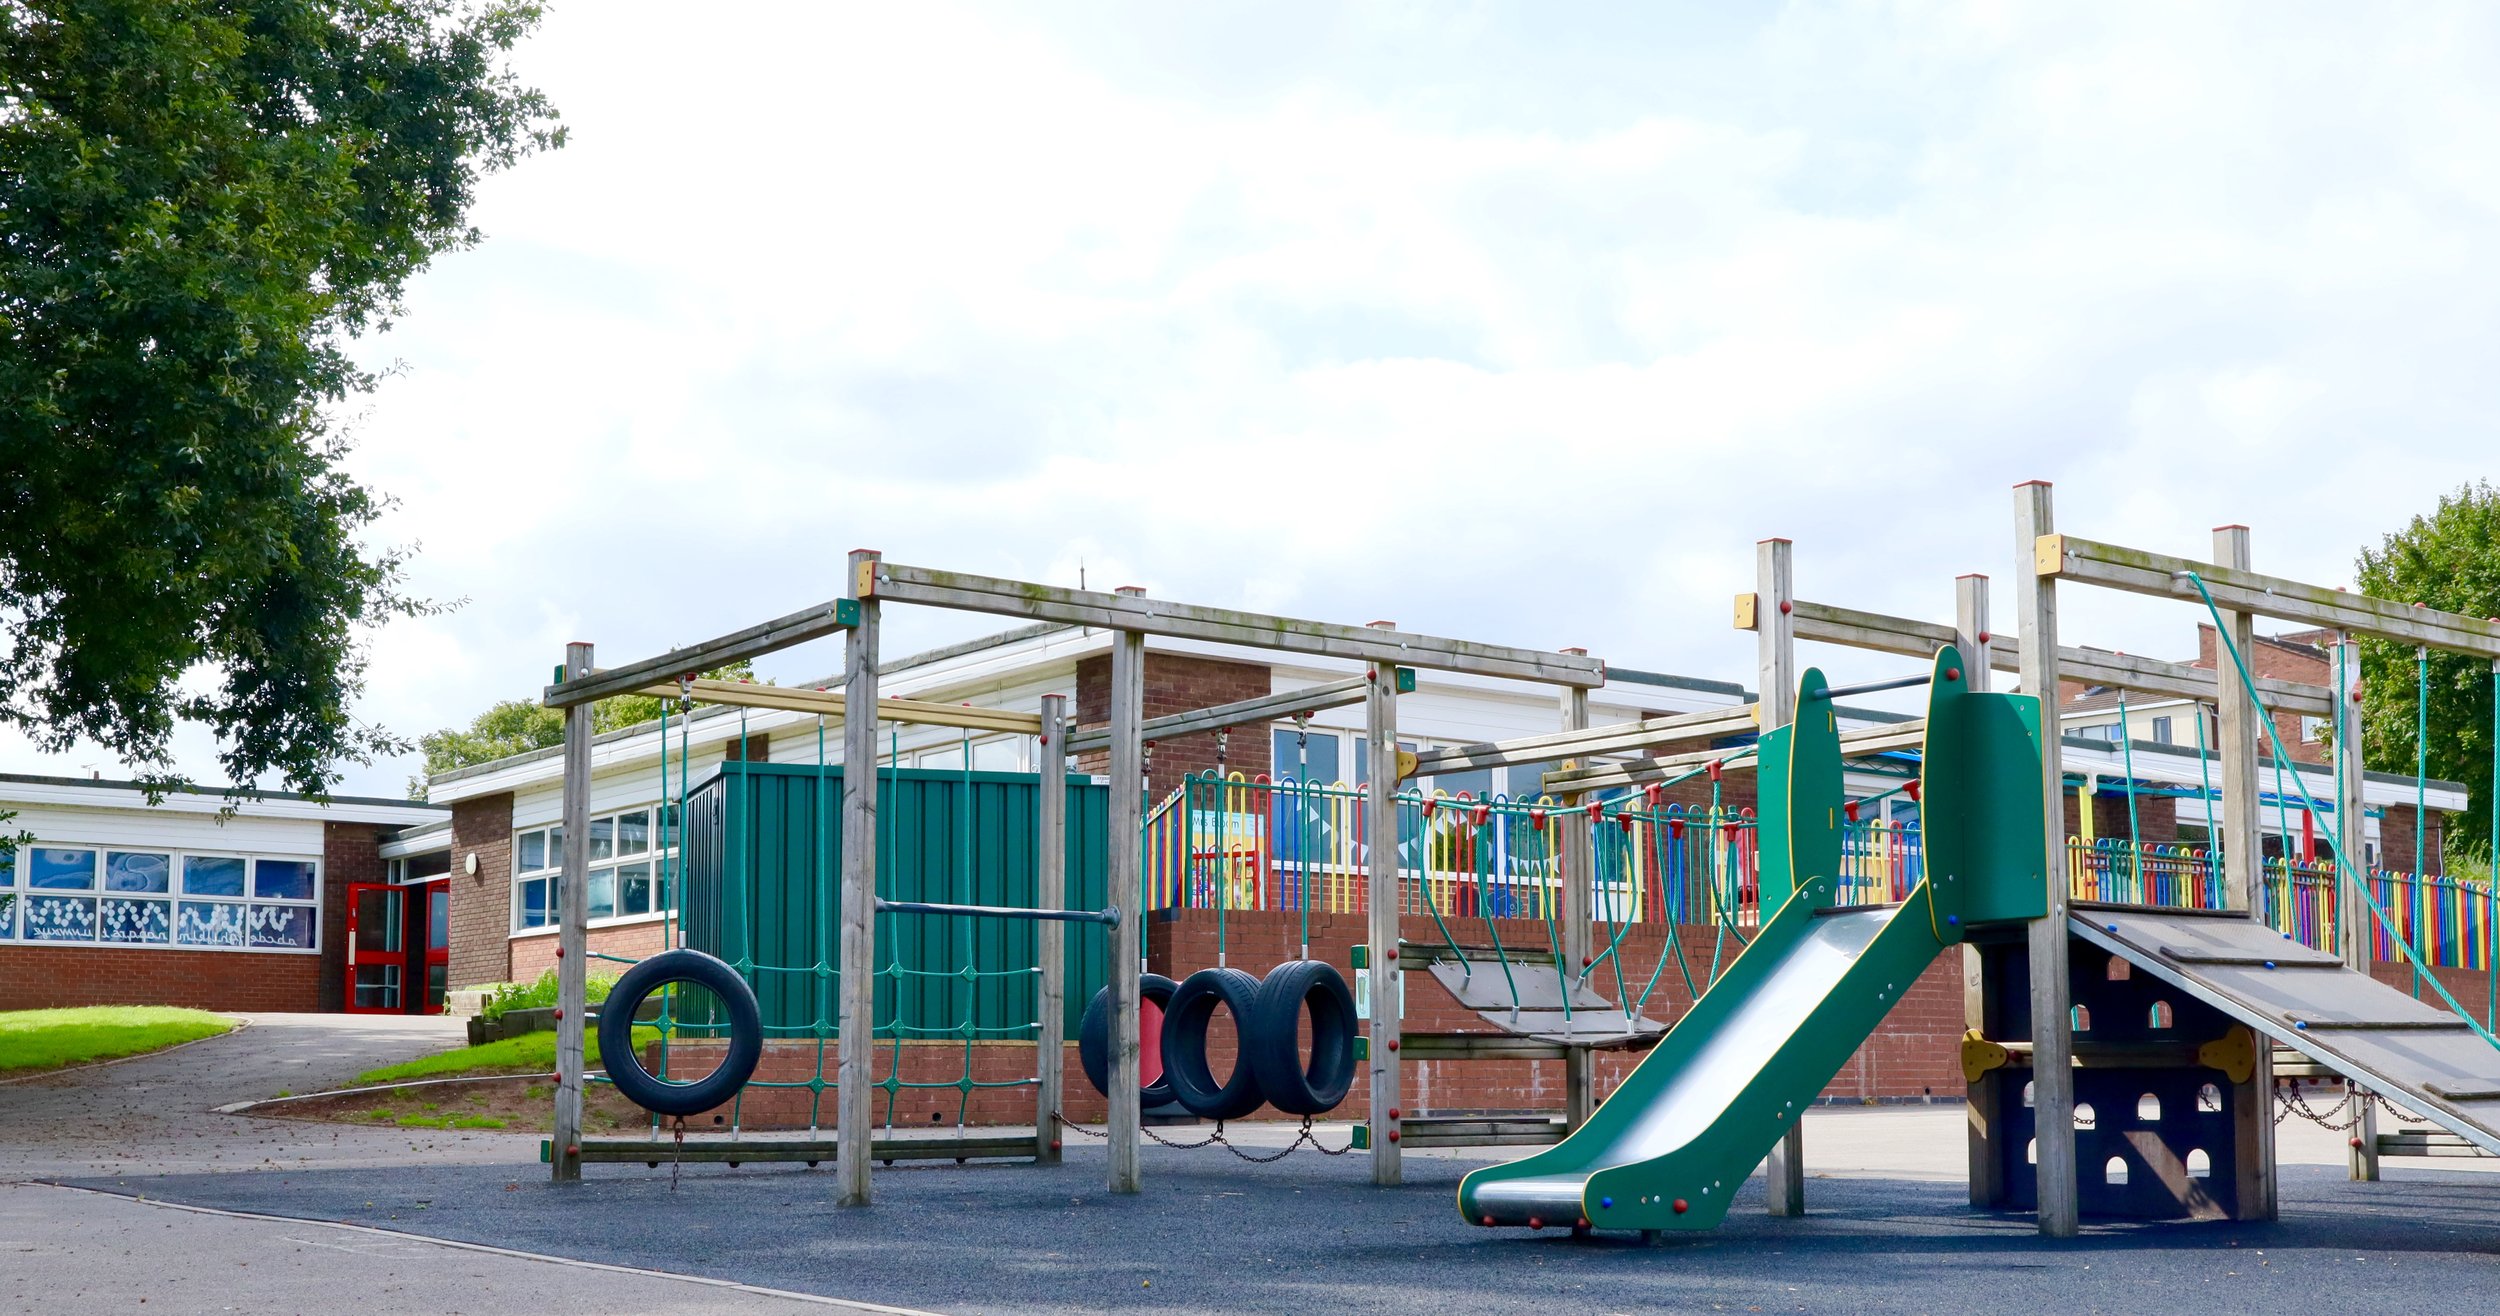 The school playground